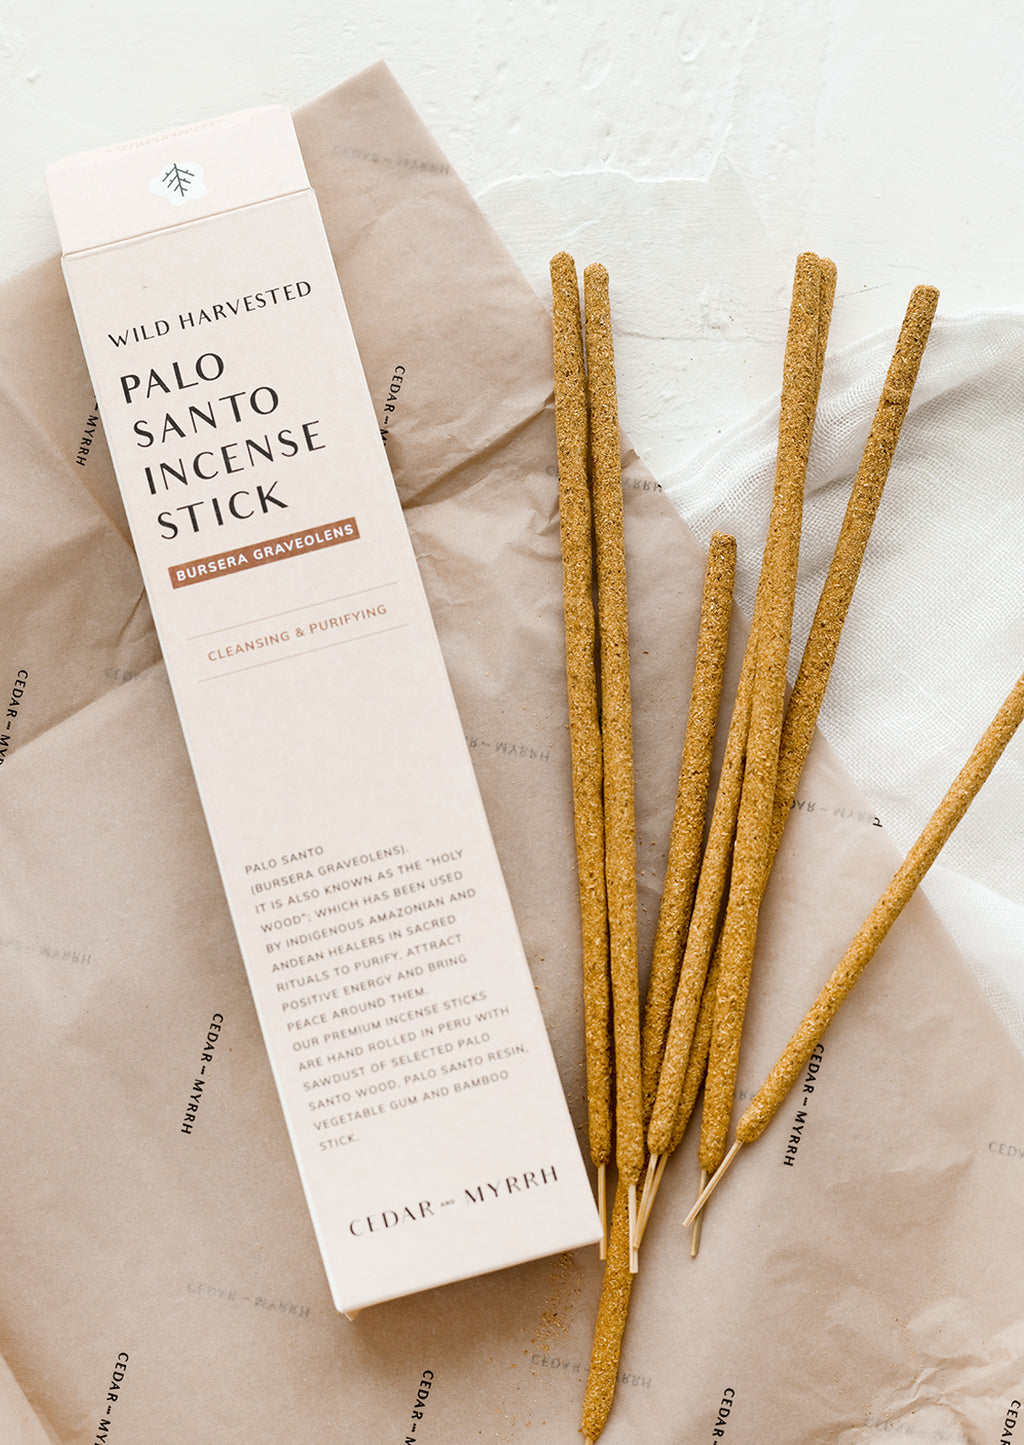 Palo Santo: Palo santo rolled incense sticks.